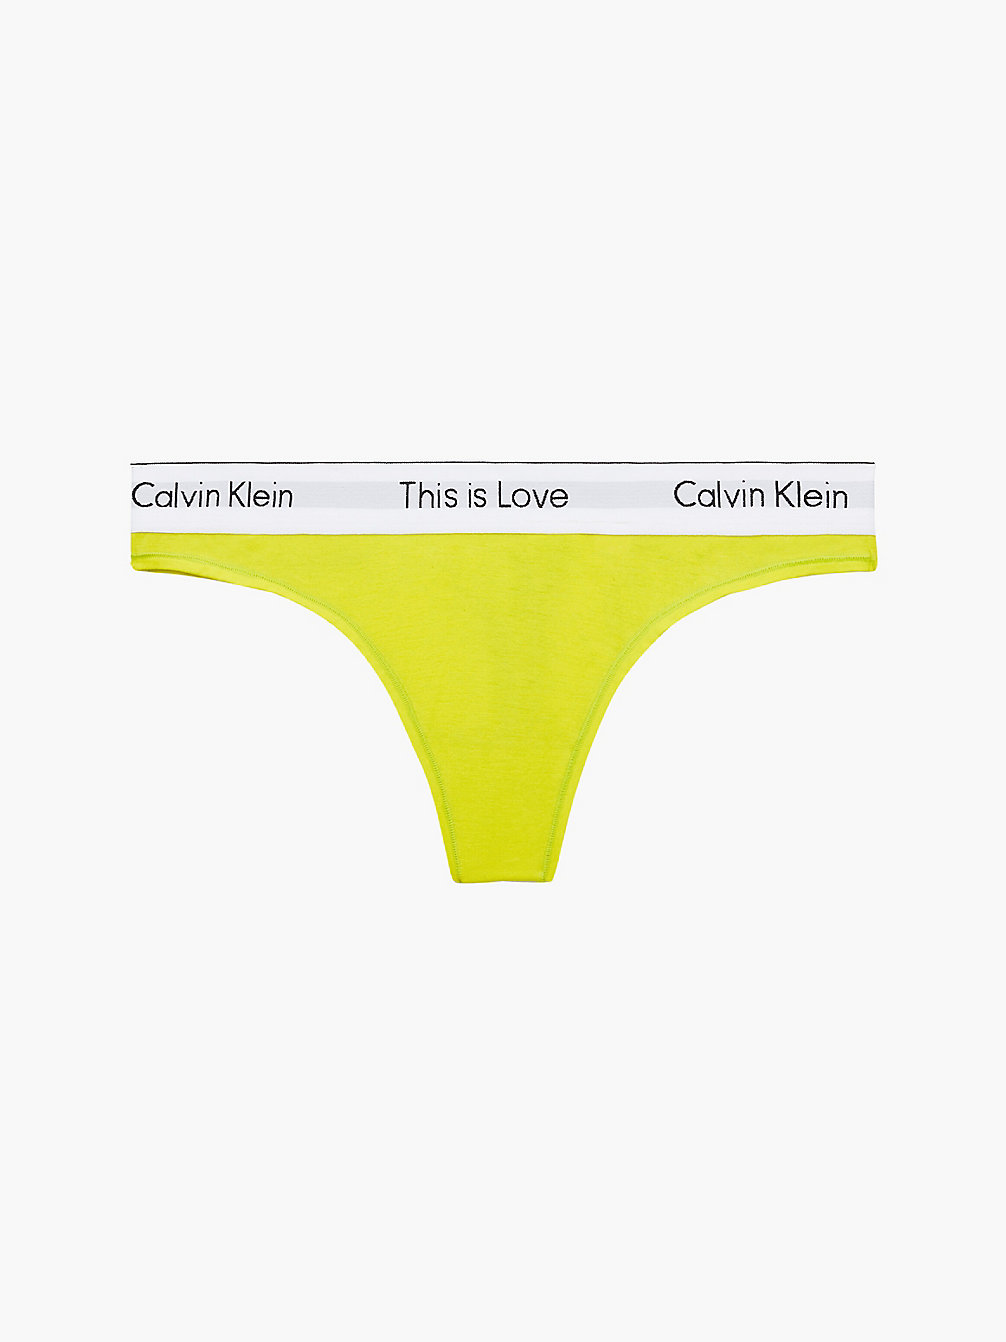 CITRINA > String - Pride > undefined dames - Calvin Klein